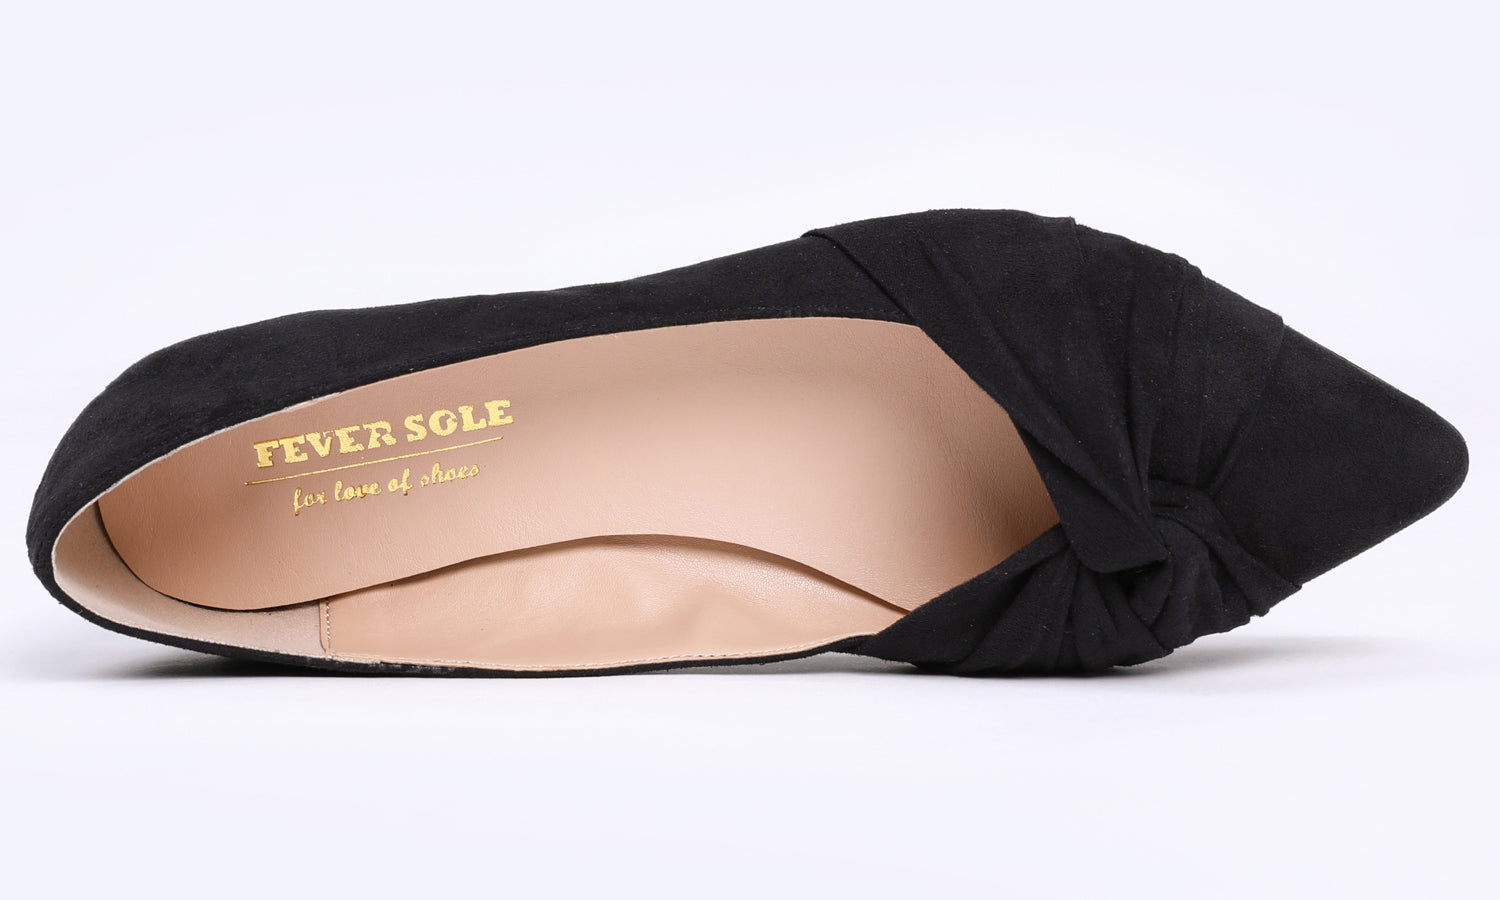 Feversole Women's Pointed Toe Bow Tie Trim Fashion Ballet Flat Black